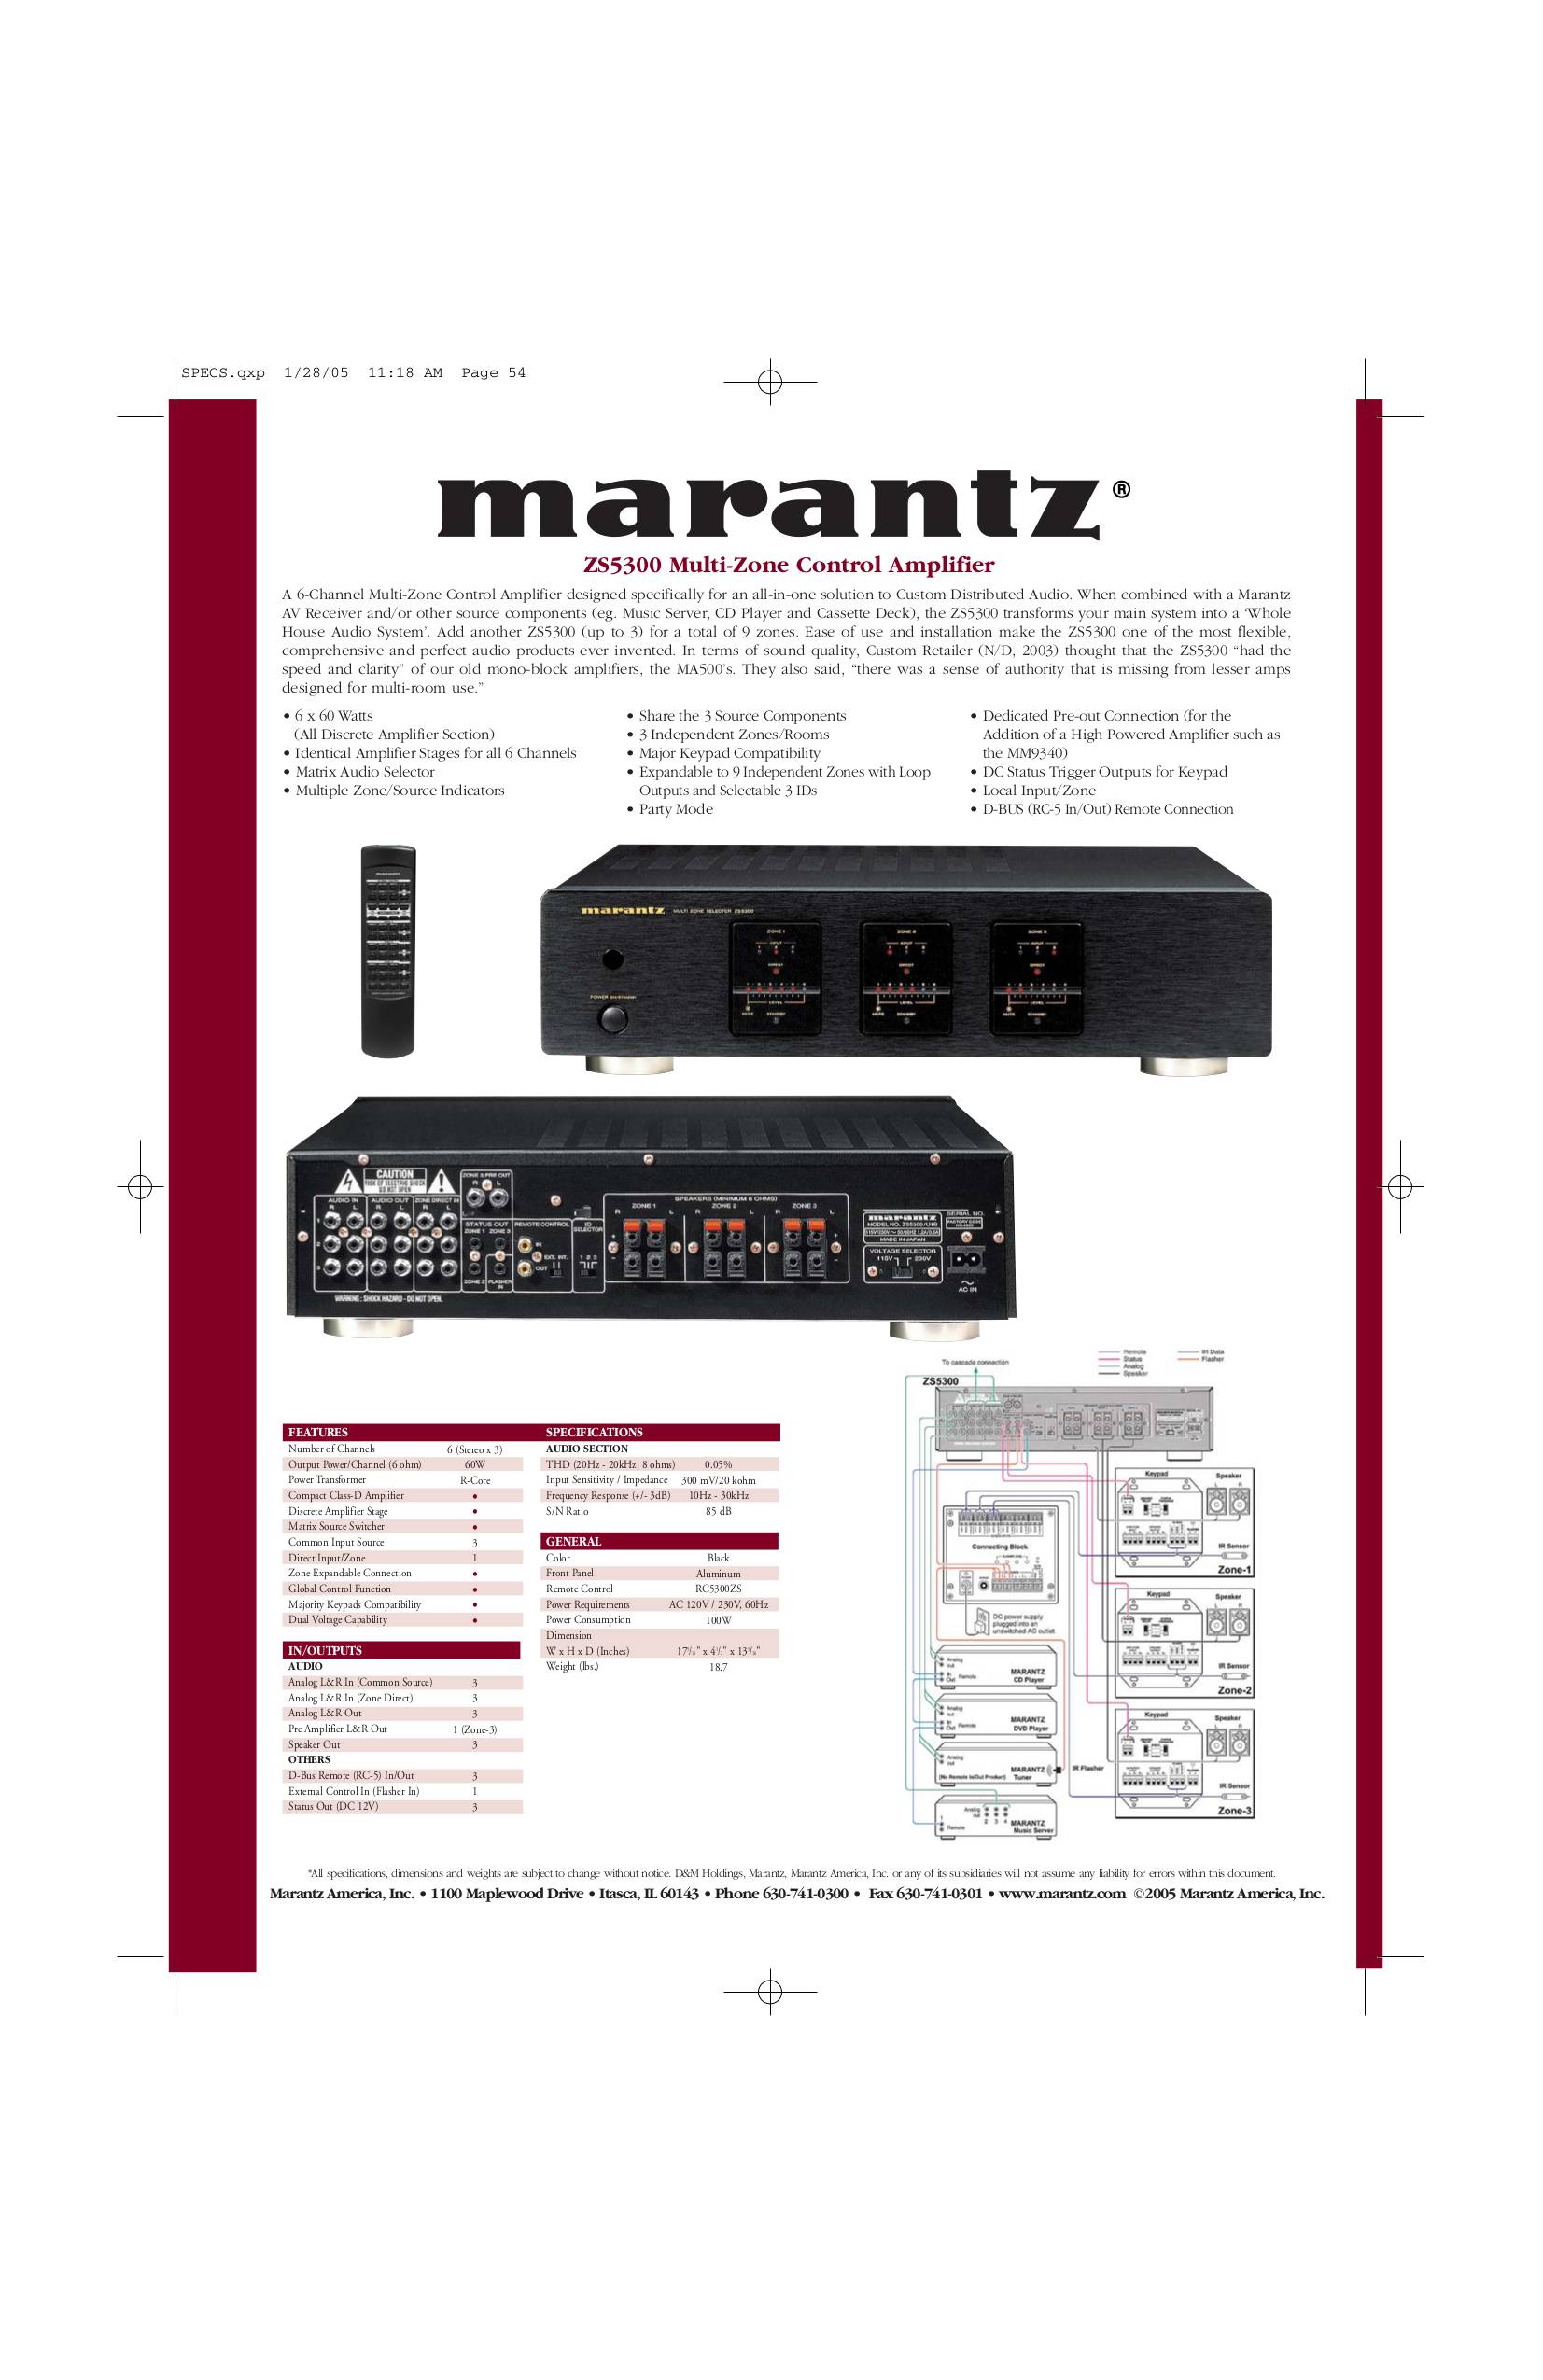 Marantz MM9340